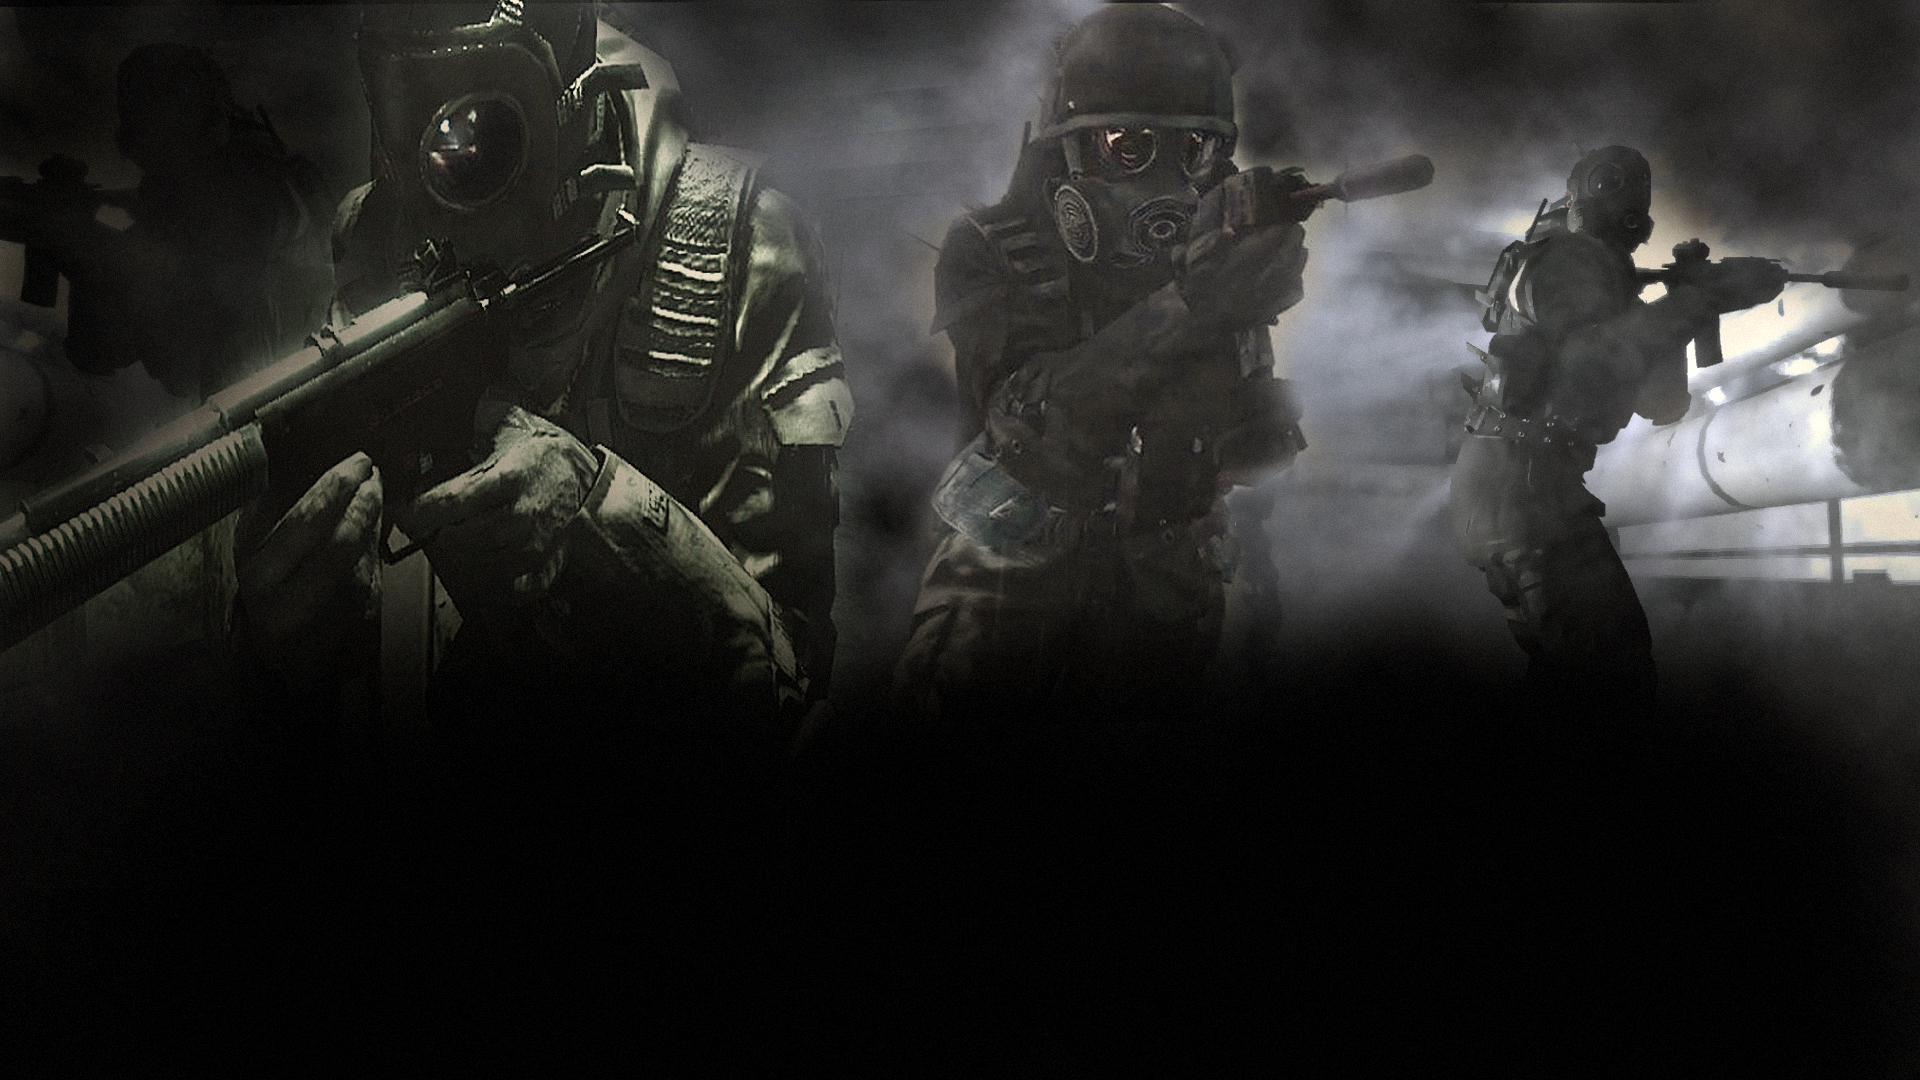 Descargar fondos de escritorio de Call Of Duty 4: Modern Warfare HD